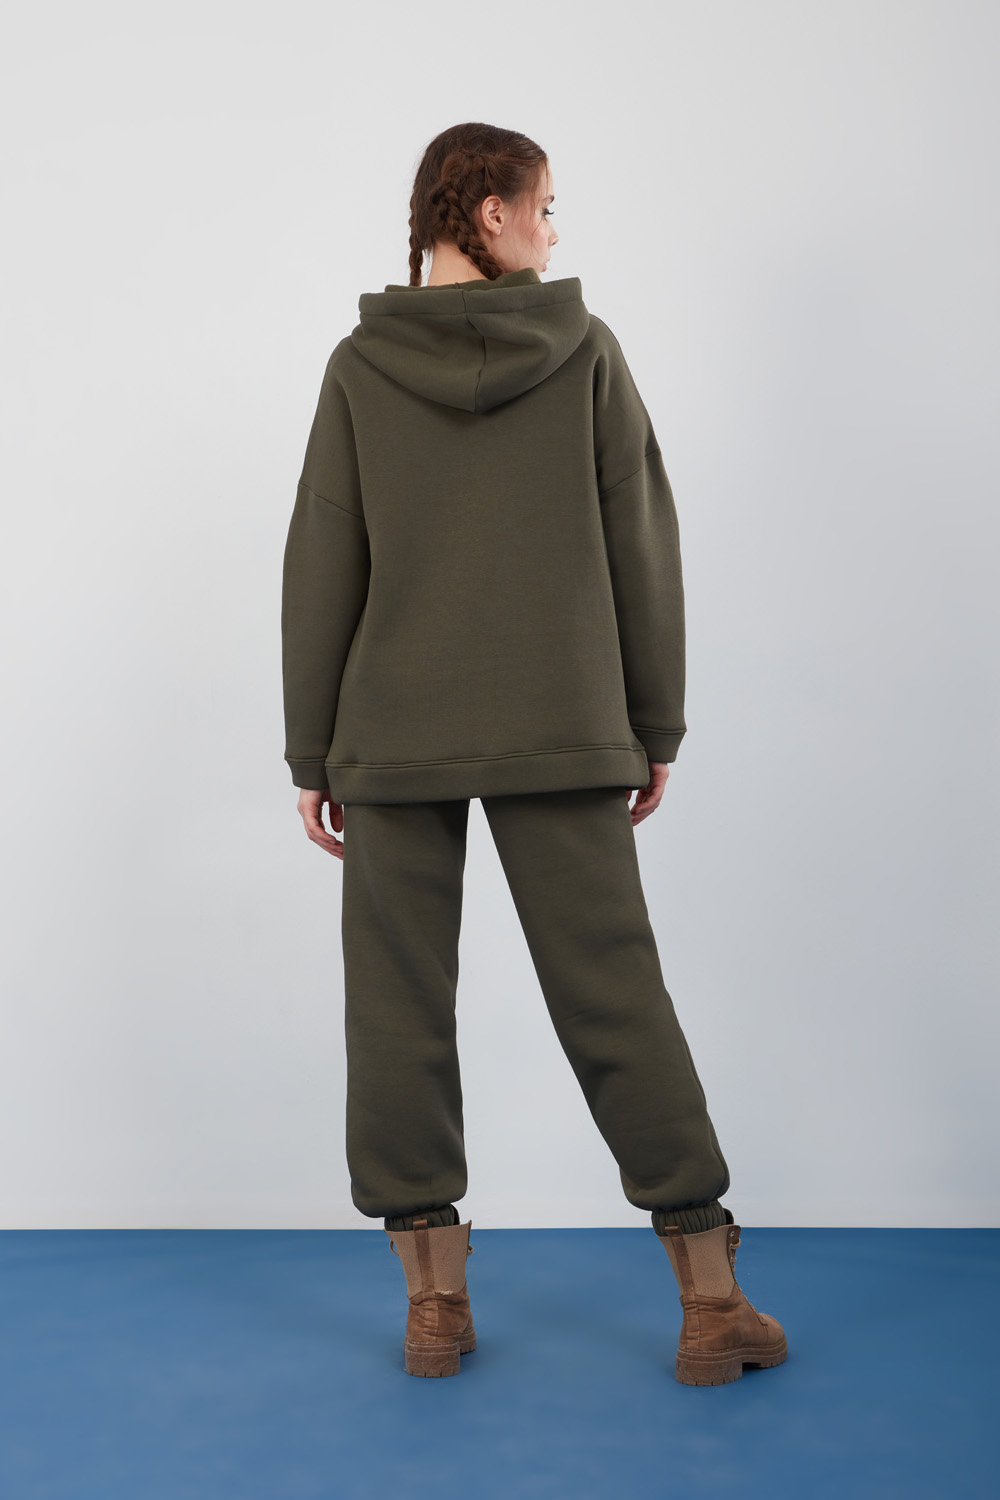 Khaki Hooded Winter Sweatshirt with Pockets